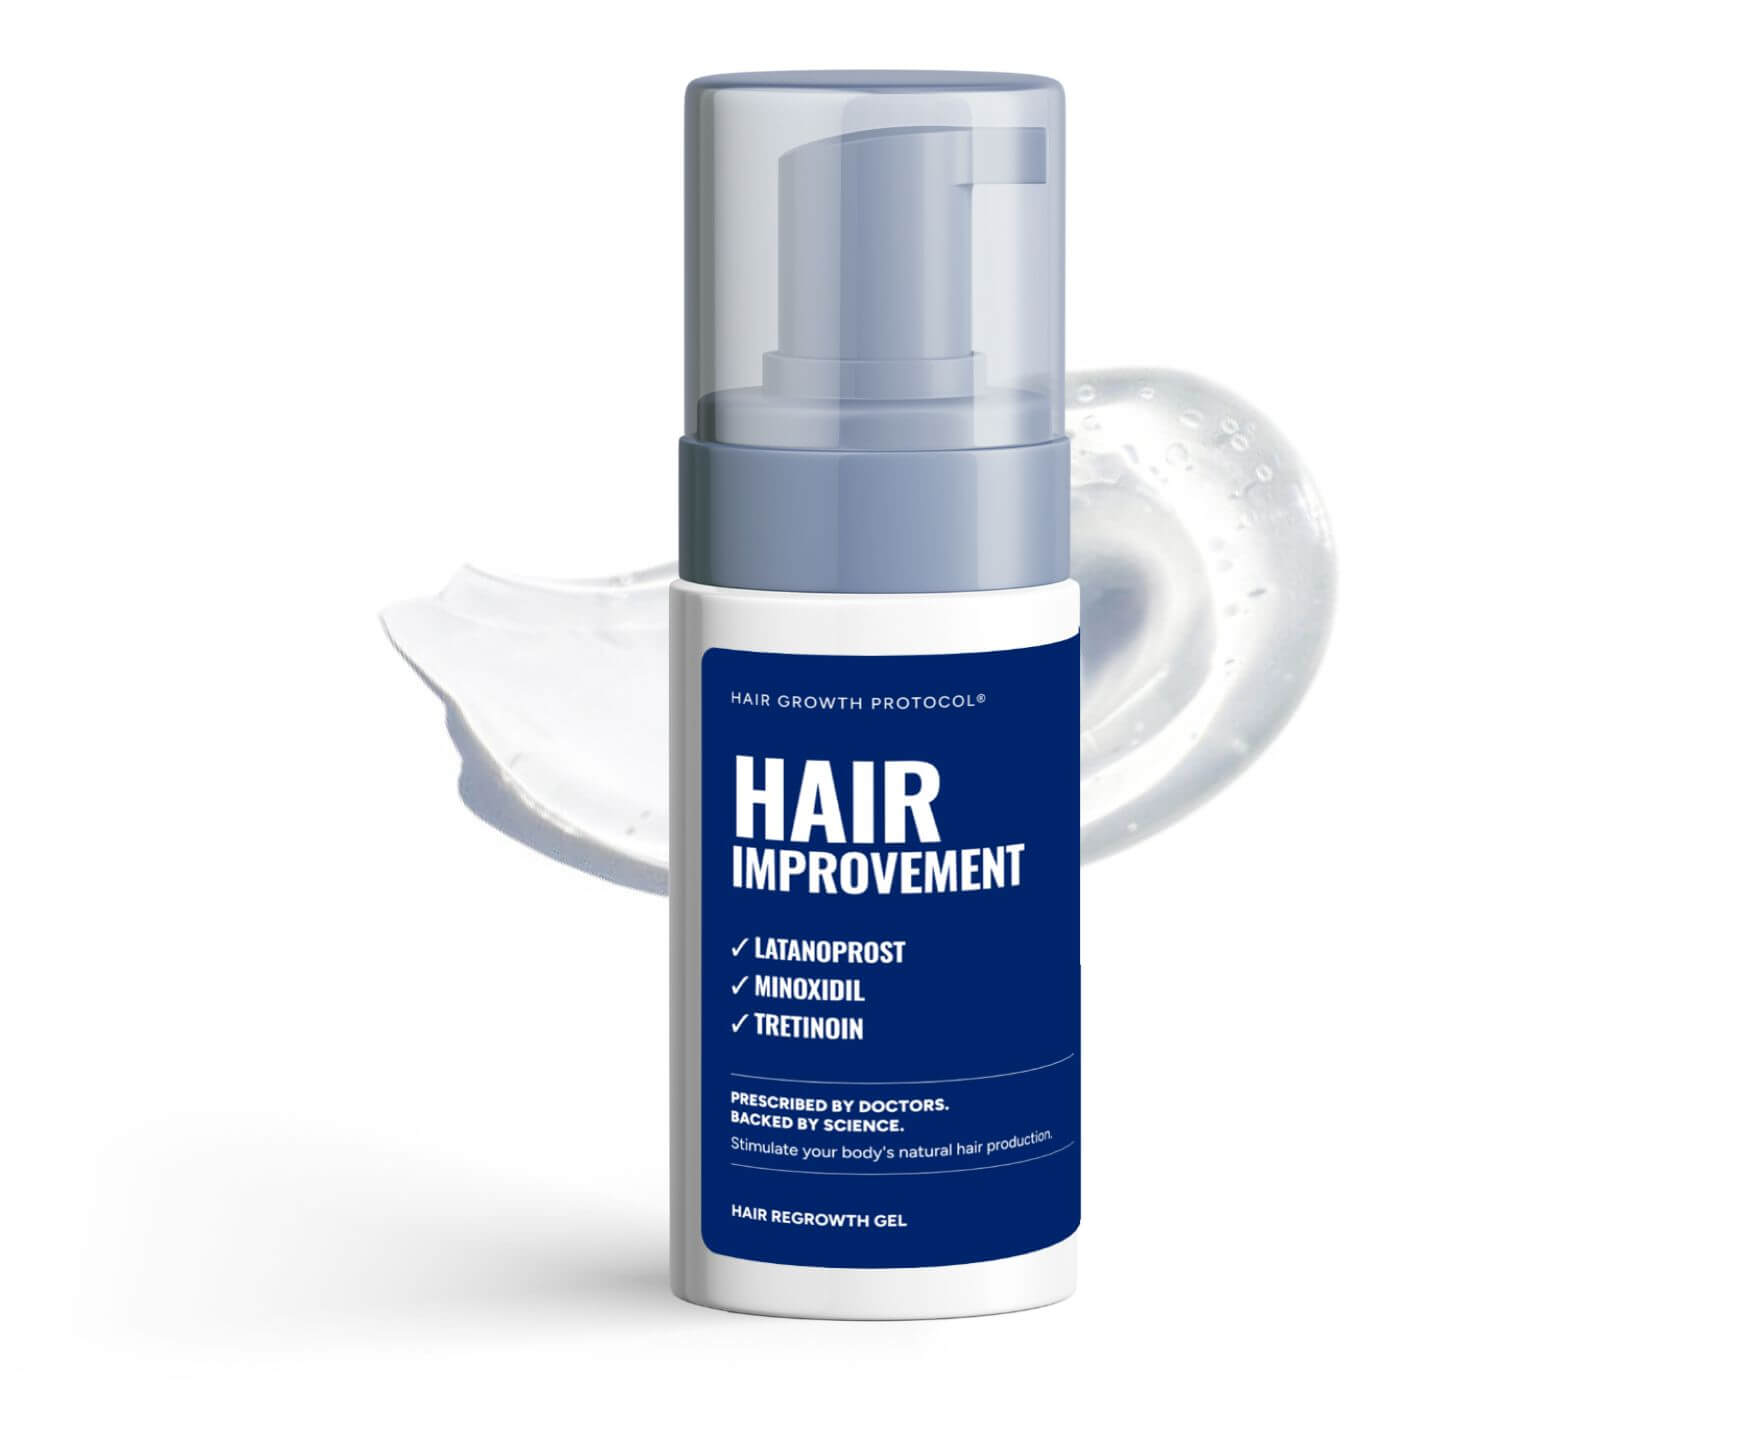 Hair Improvement Protocol